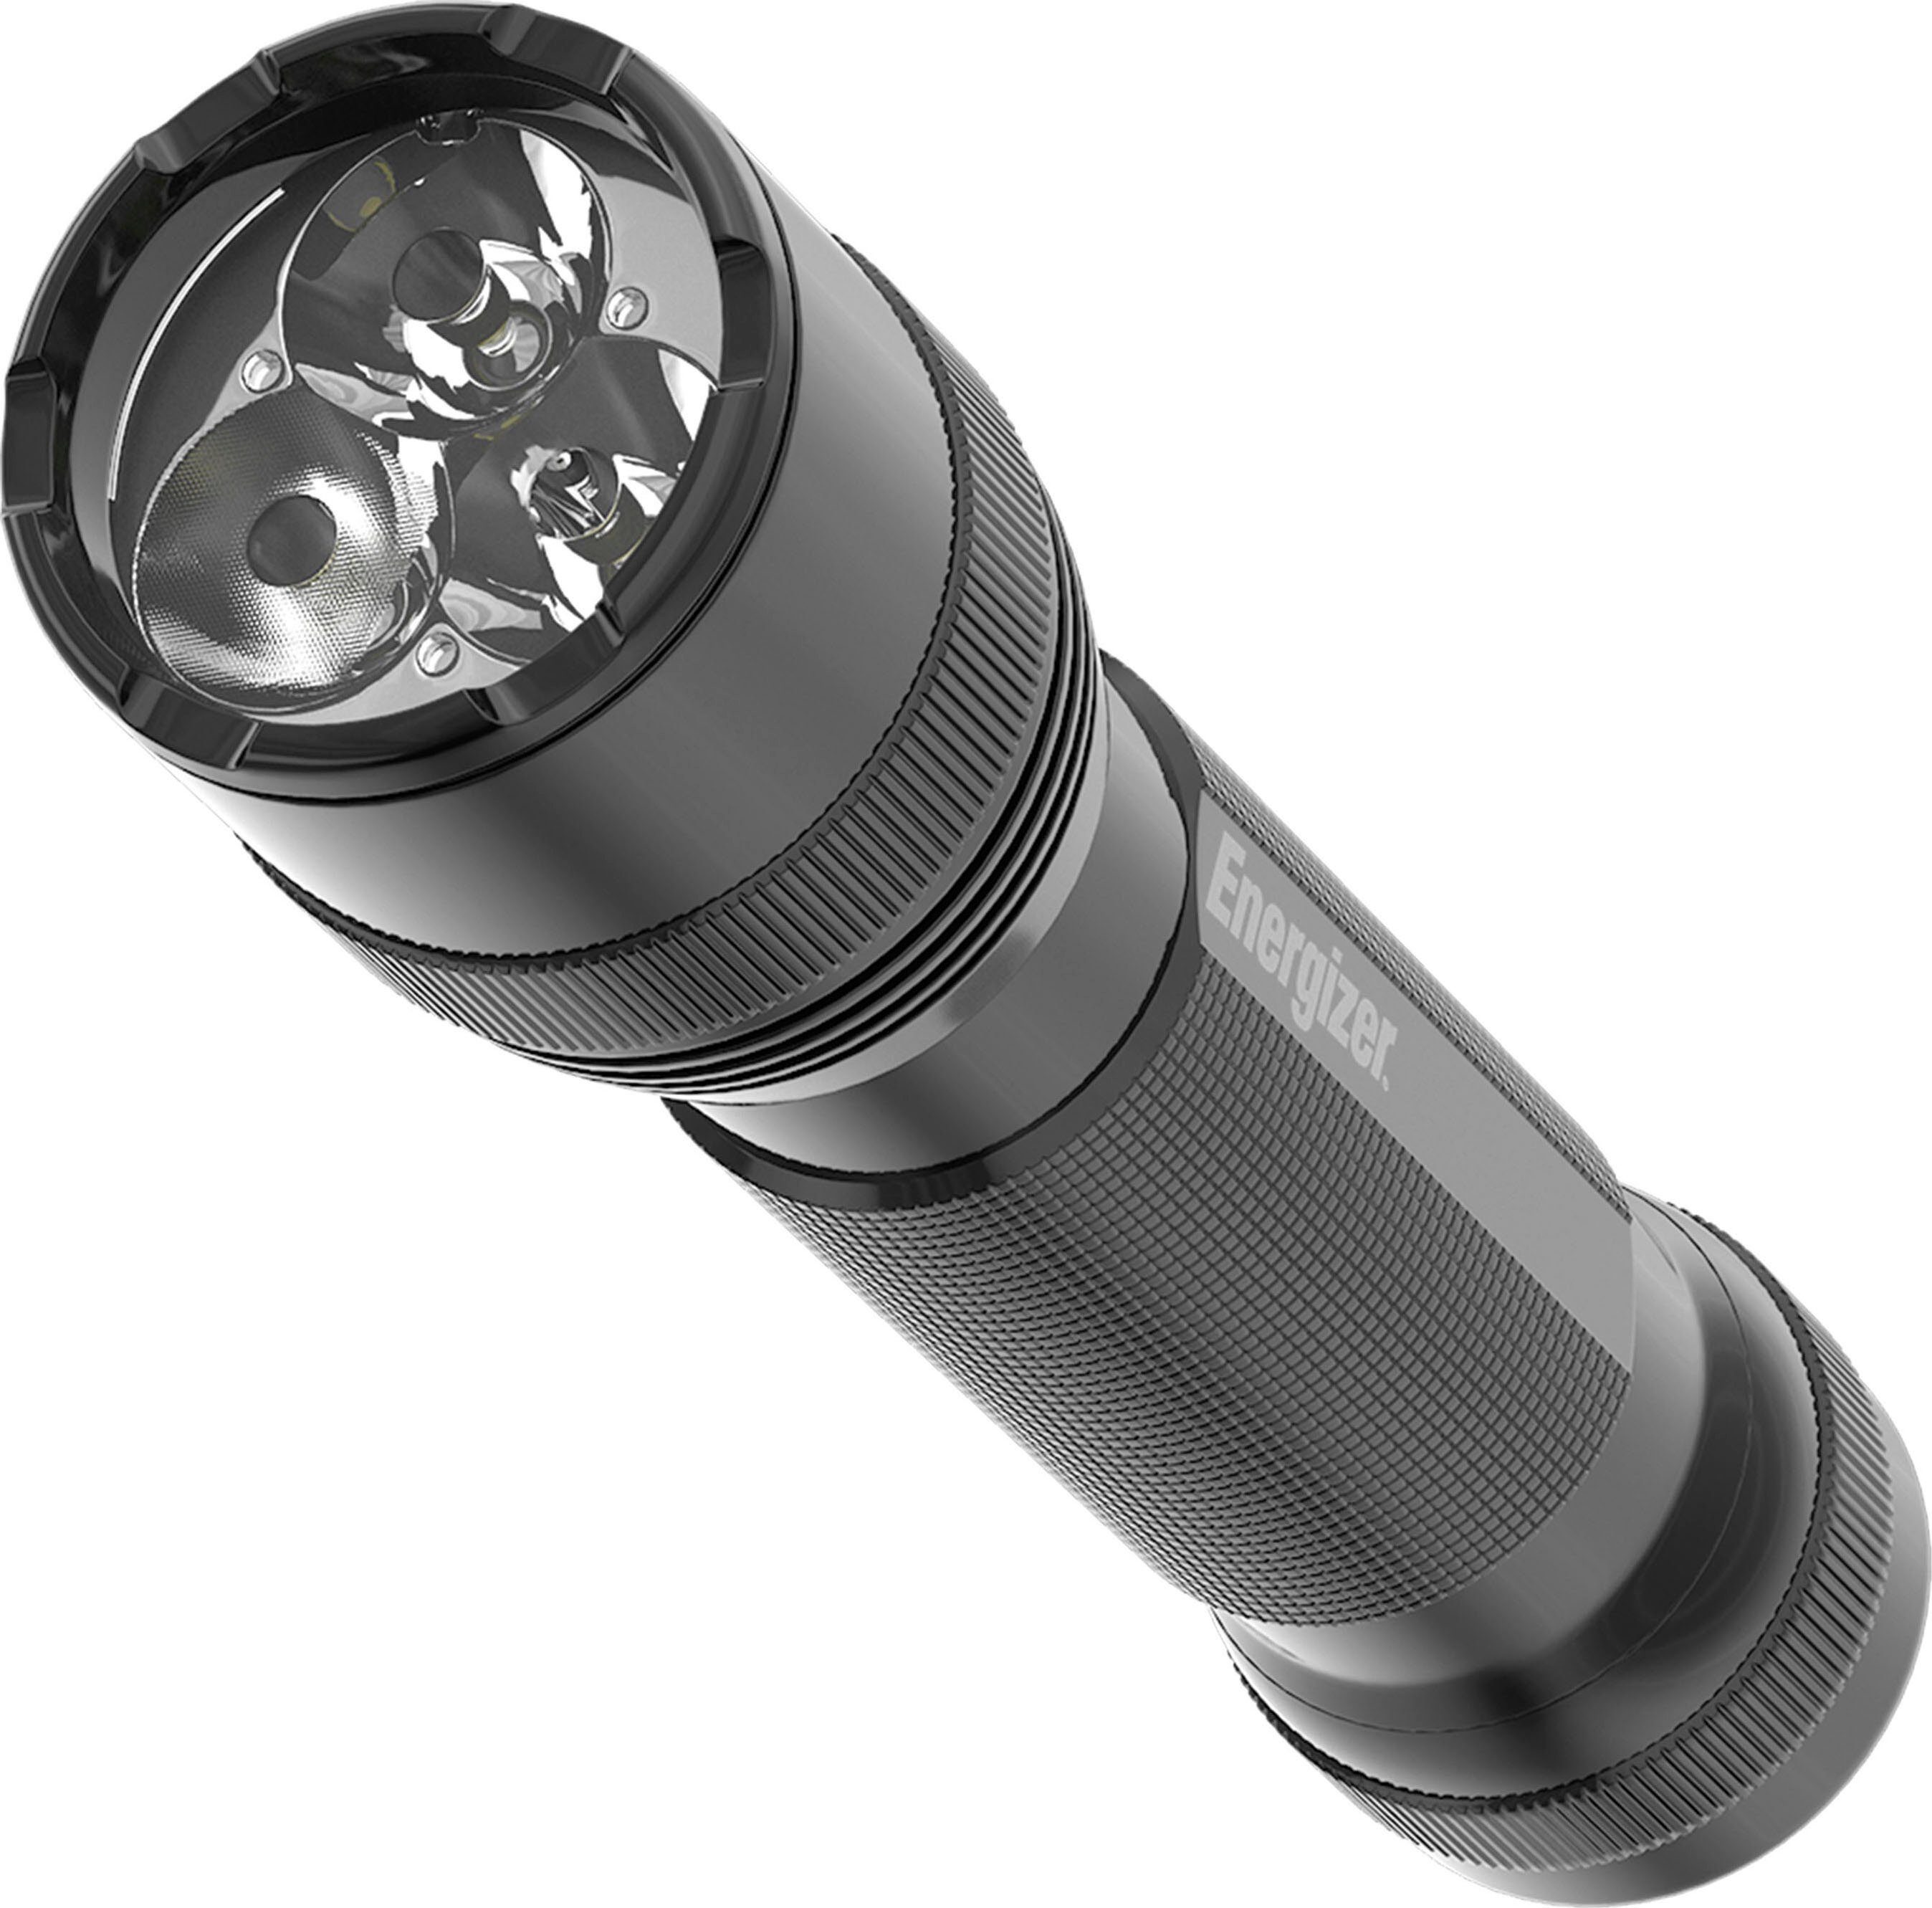 Energizer Hybrid Taschenlampe Metal Tactical